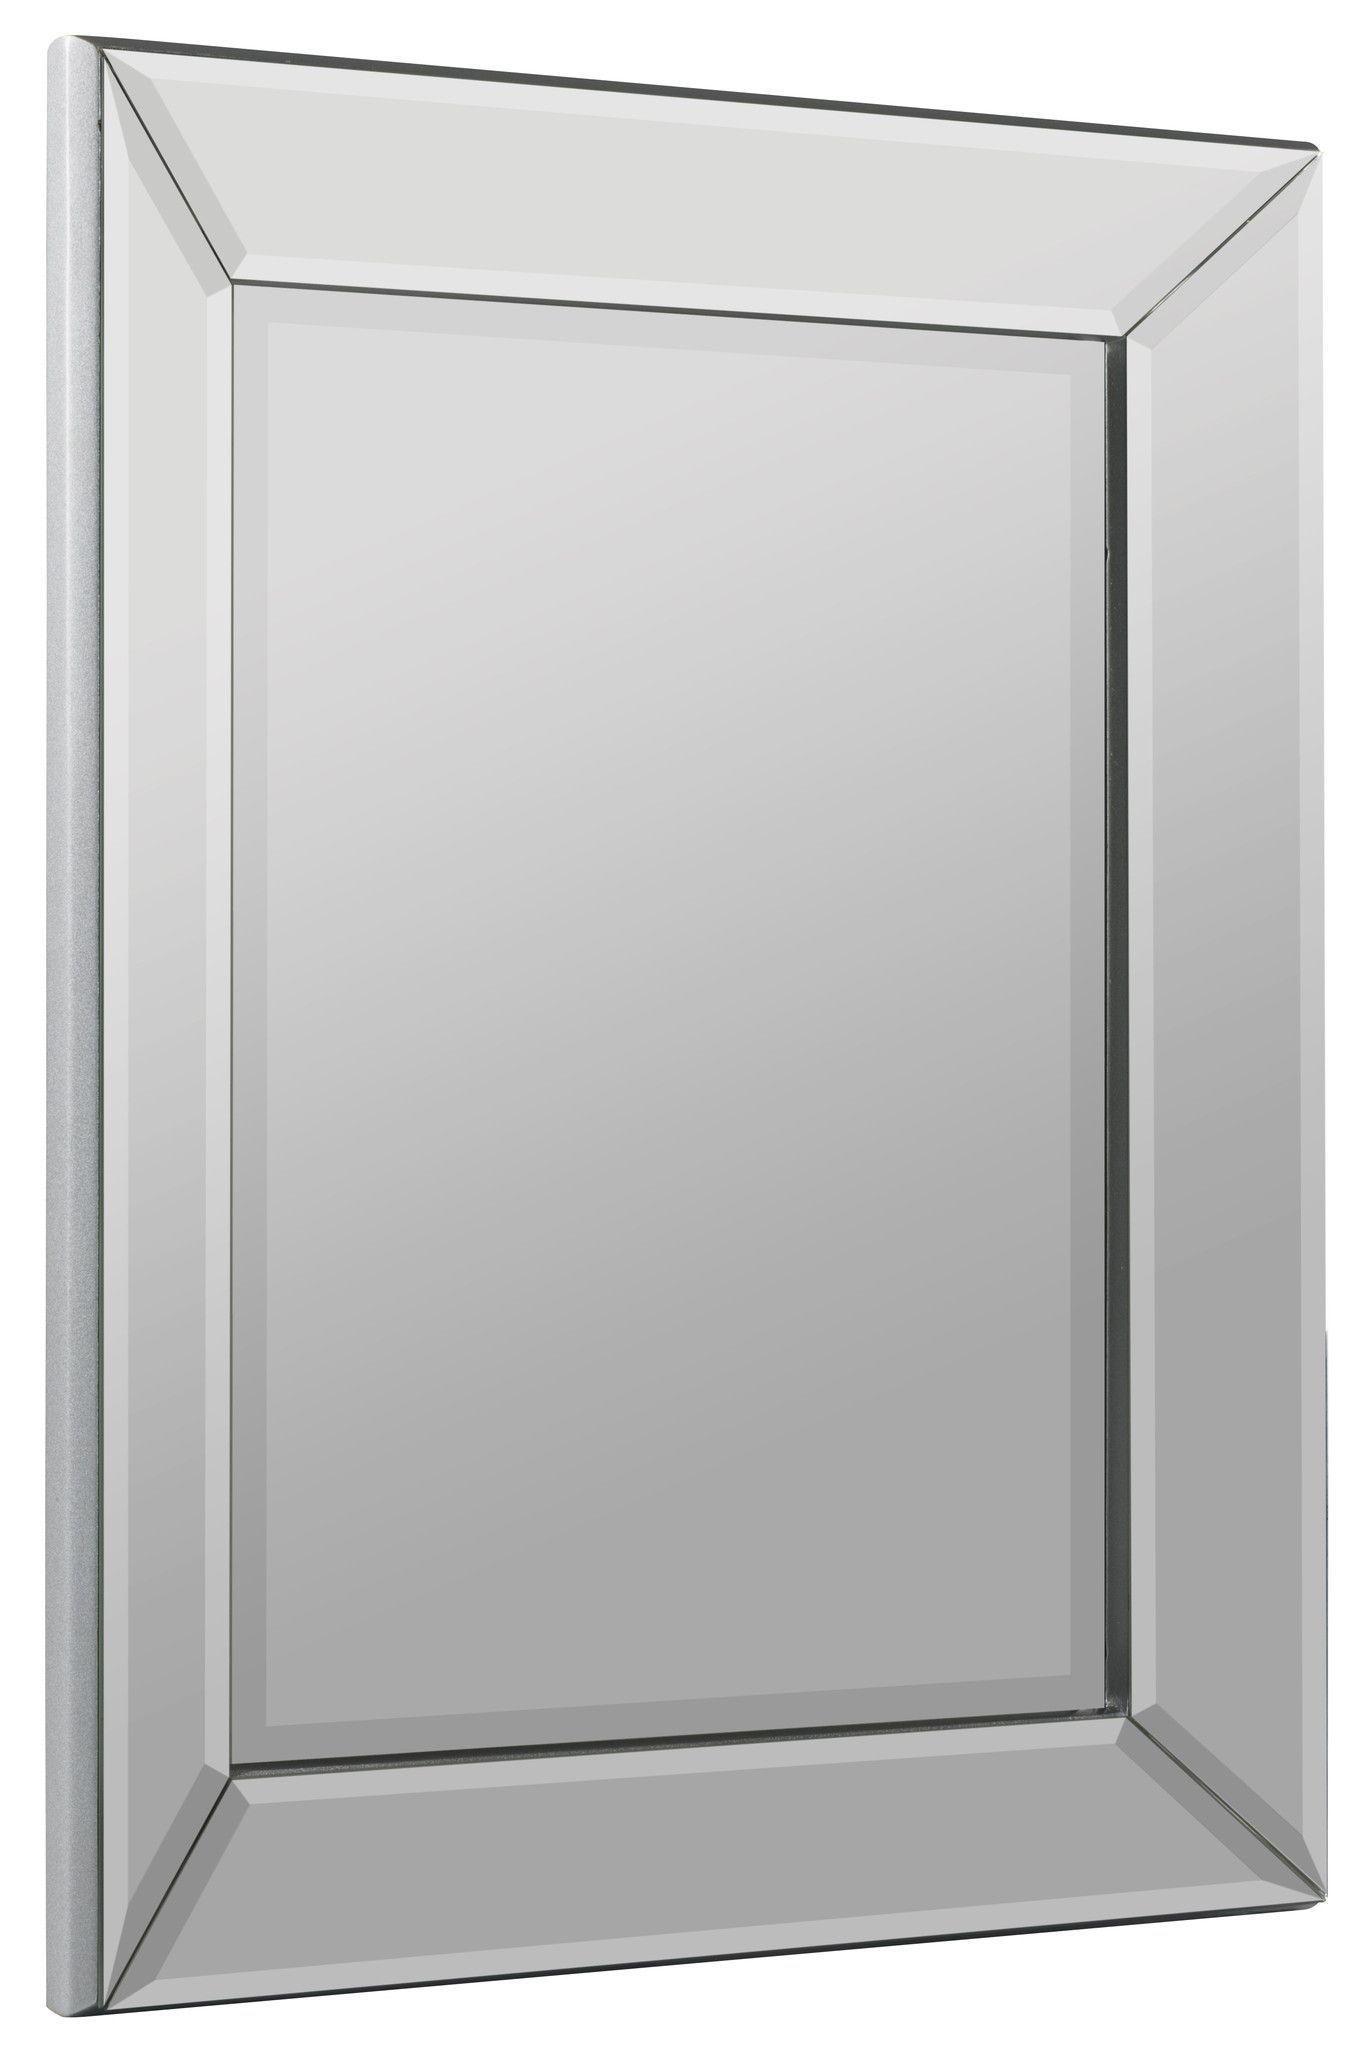 Porter Mirror Frameless Mirror; Beveled Mirror | Diy Bathroom Remodel For Square Frameless Beveled Wall Mirrors (View 1 of 15)